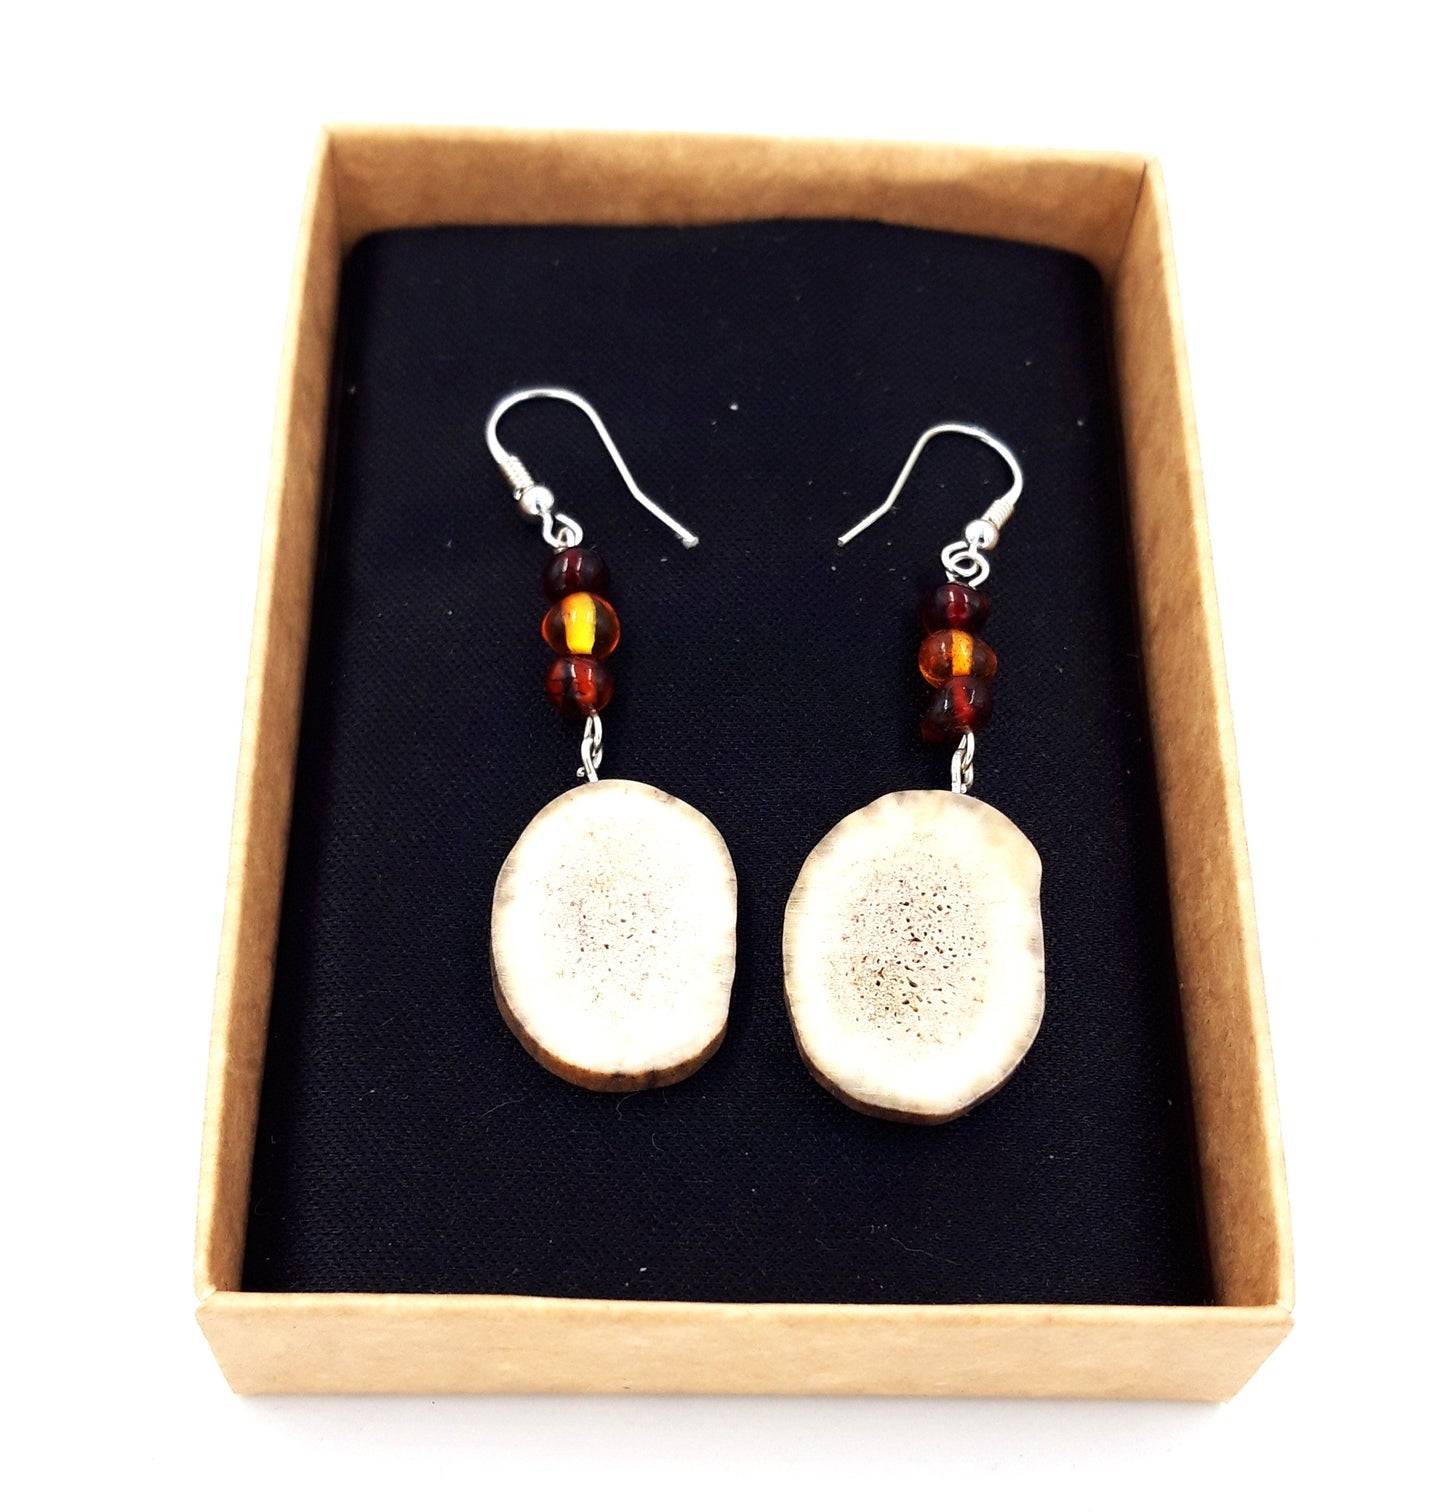 Earrings made of deer horn and amber